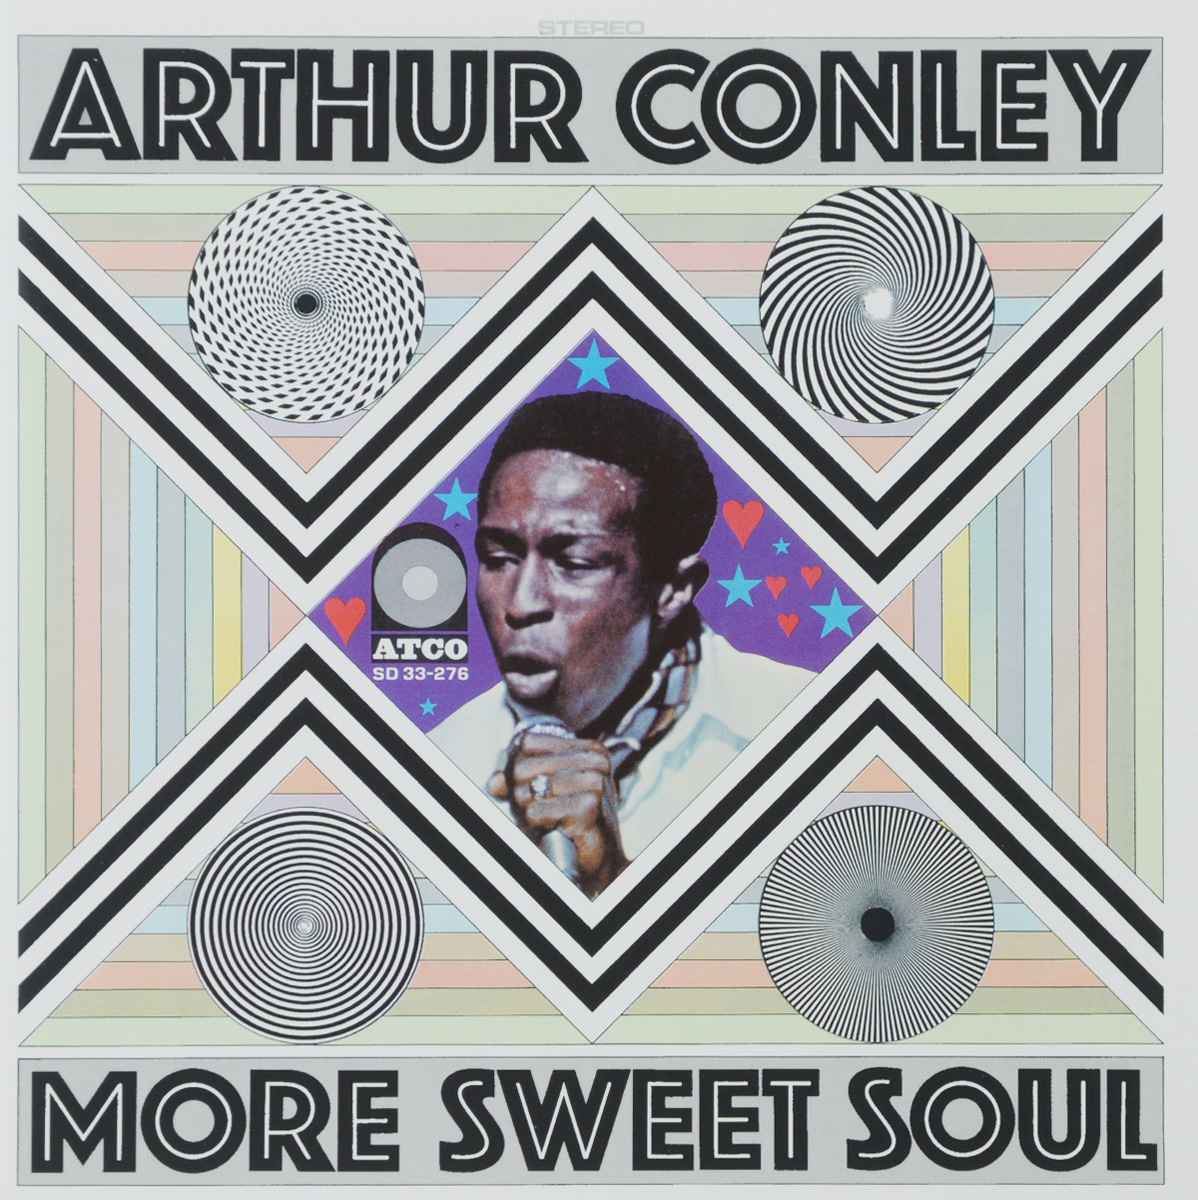 Arthur Conley. More Sweet Soul